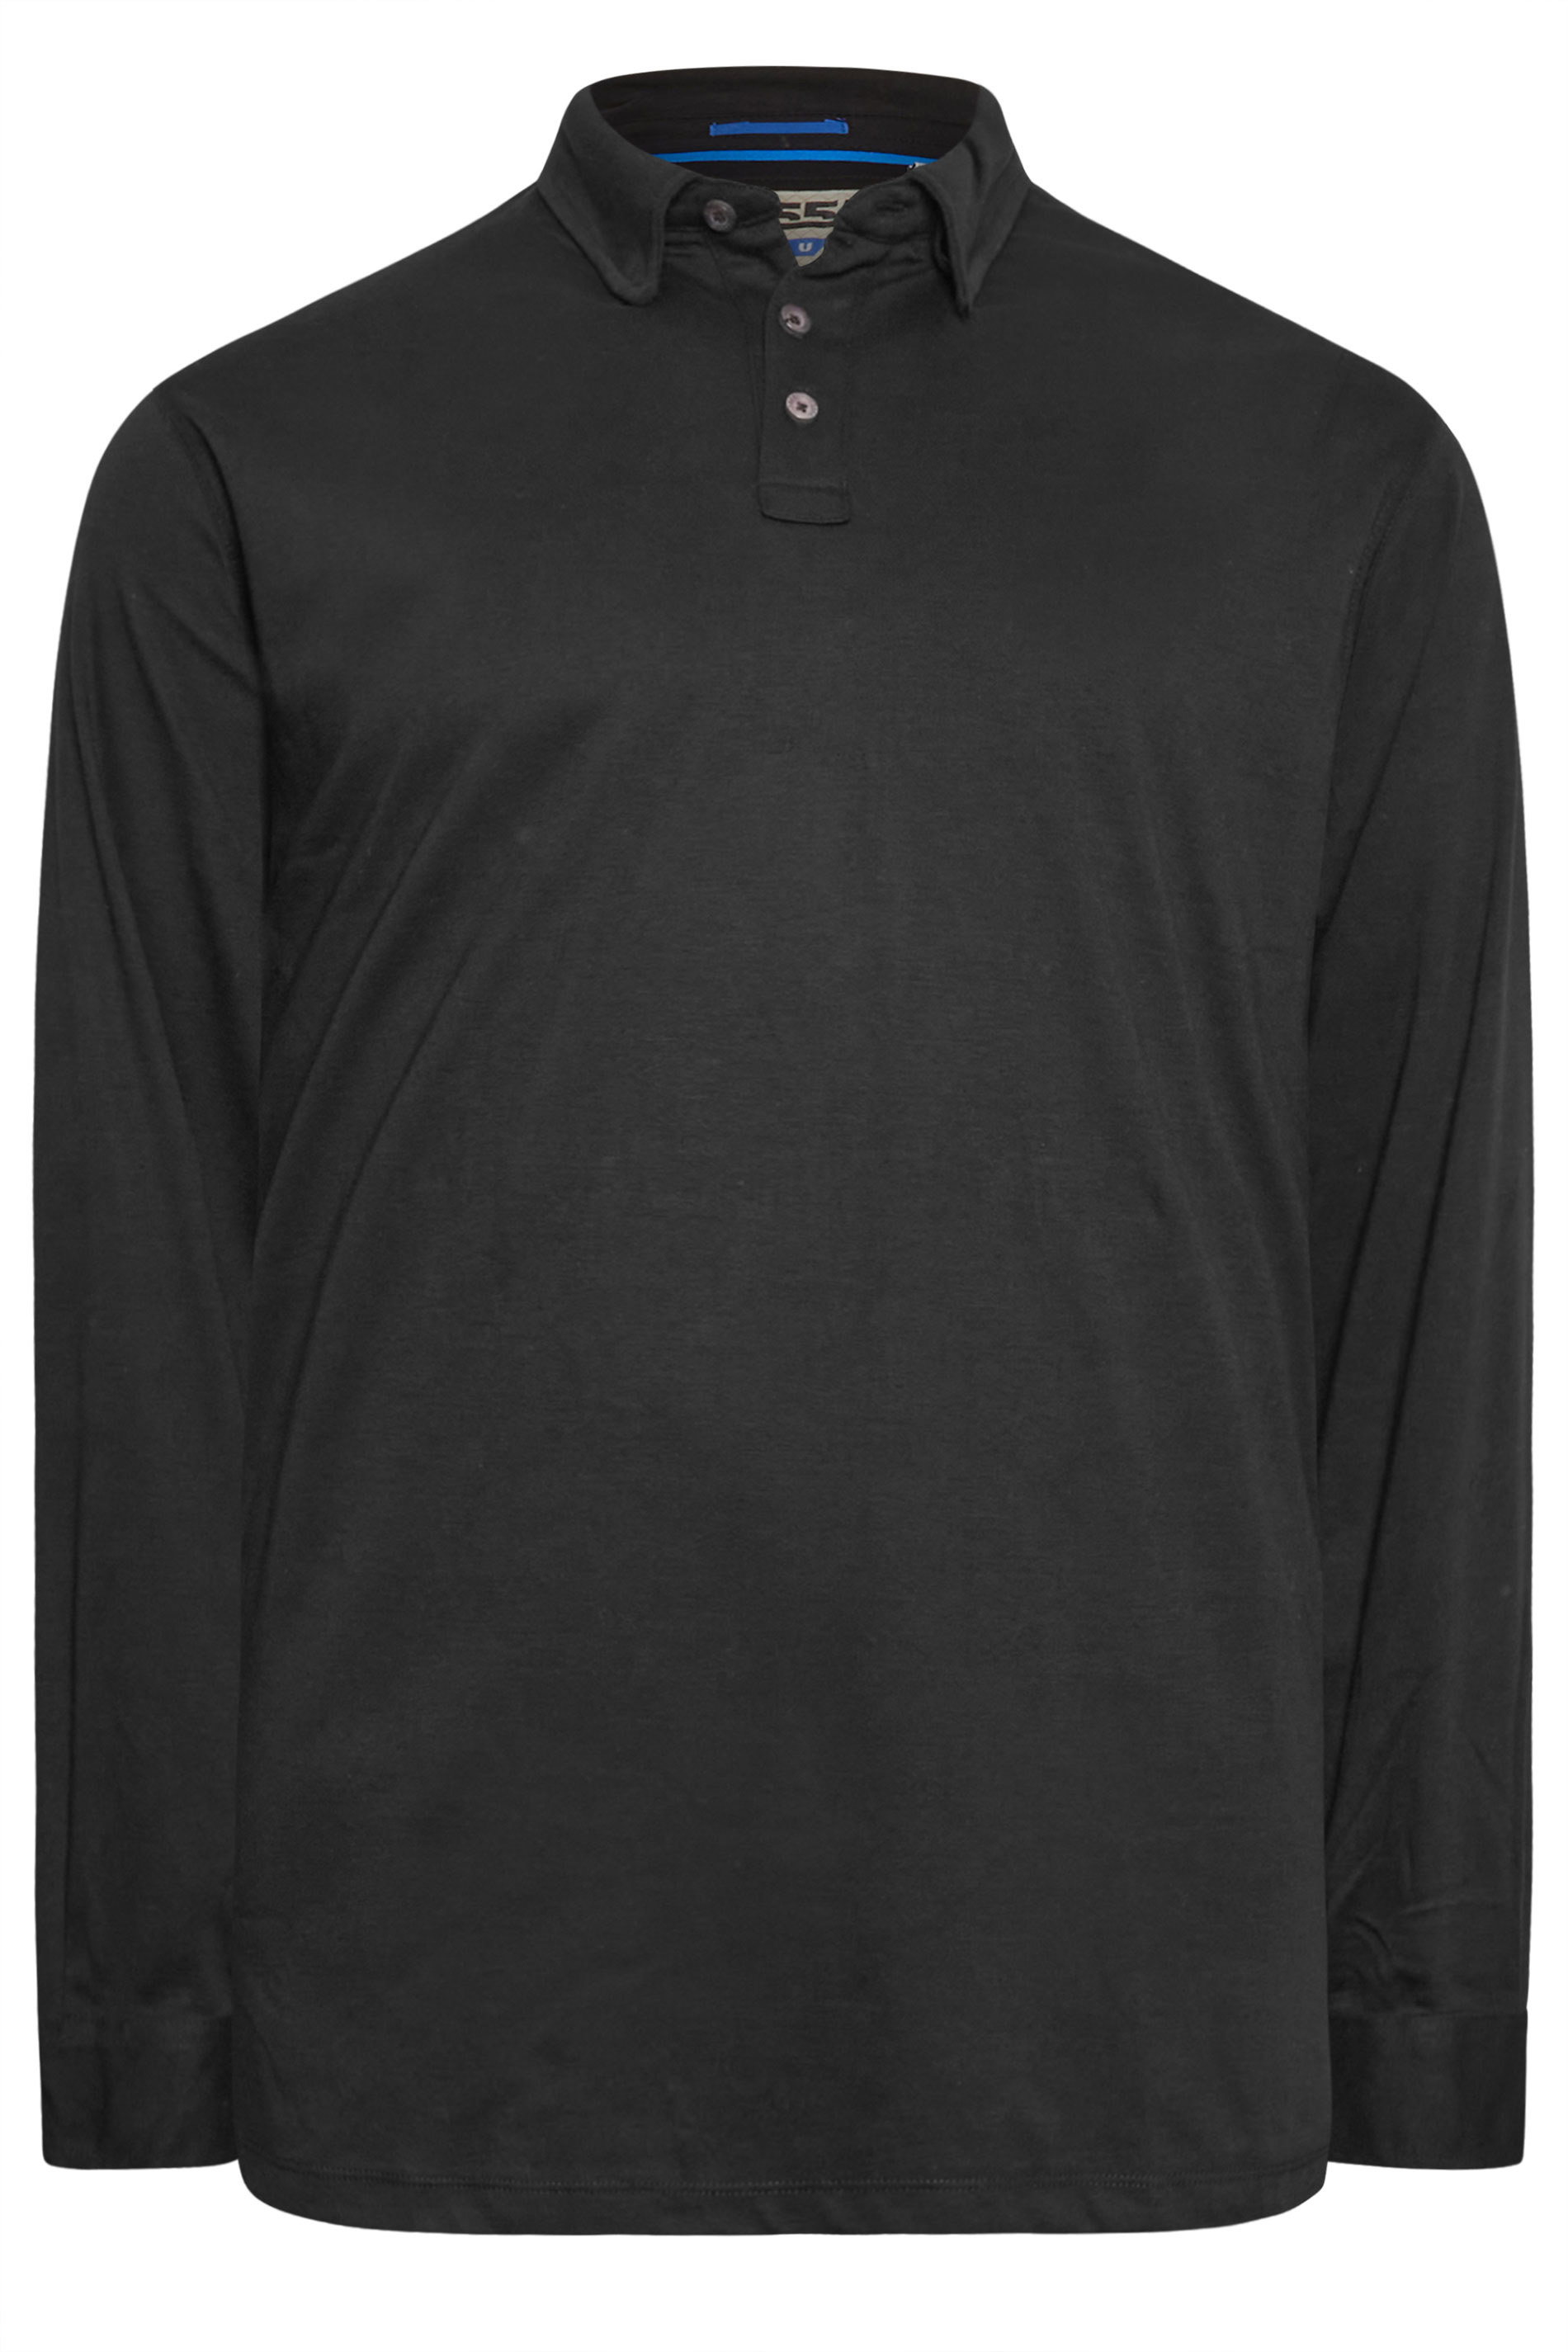 D555 Big & Tall Black Long Sleeve Polo Shirt | BadRhino 3